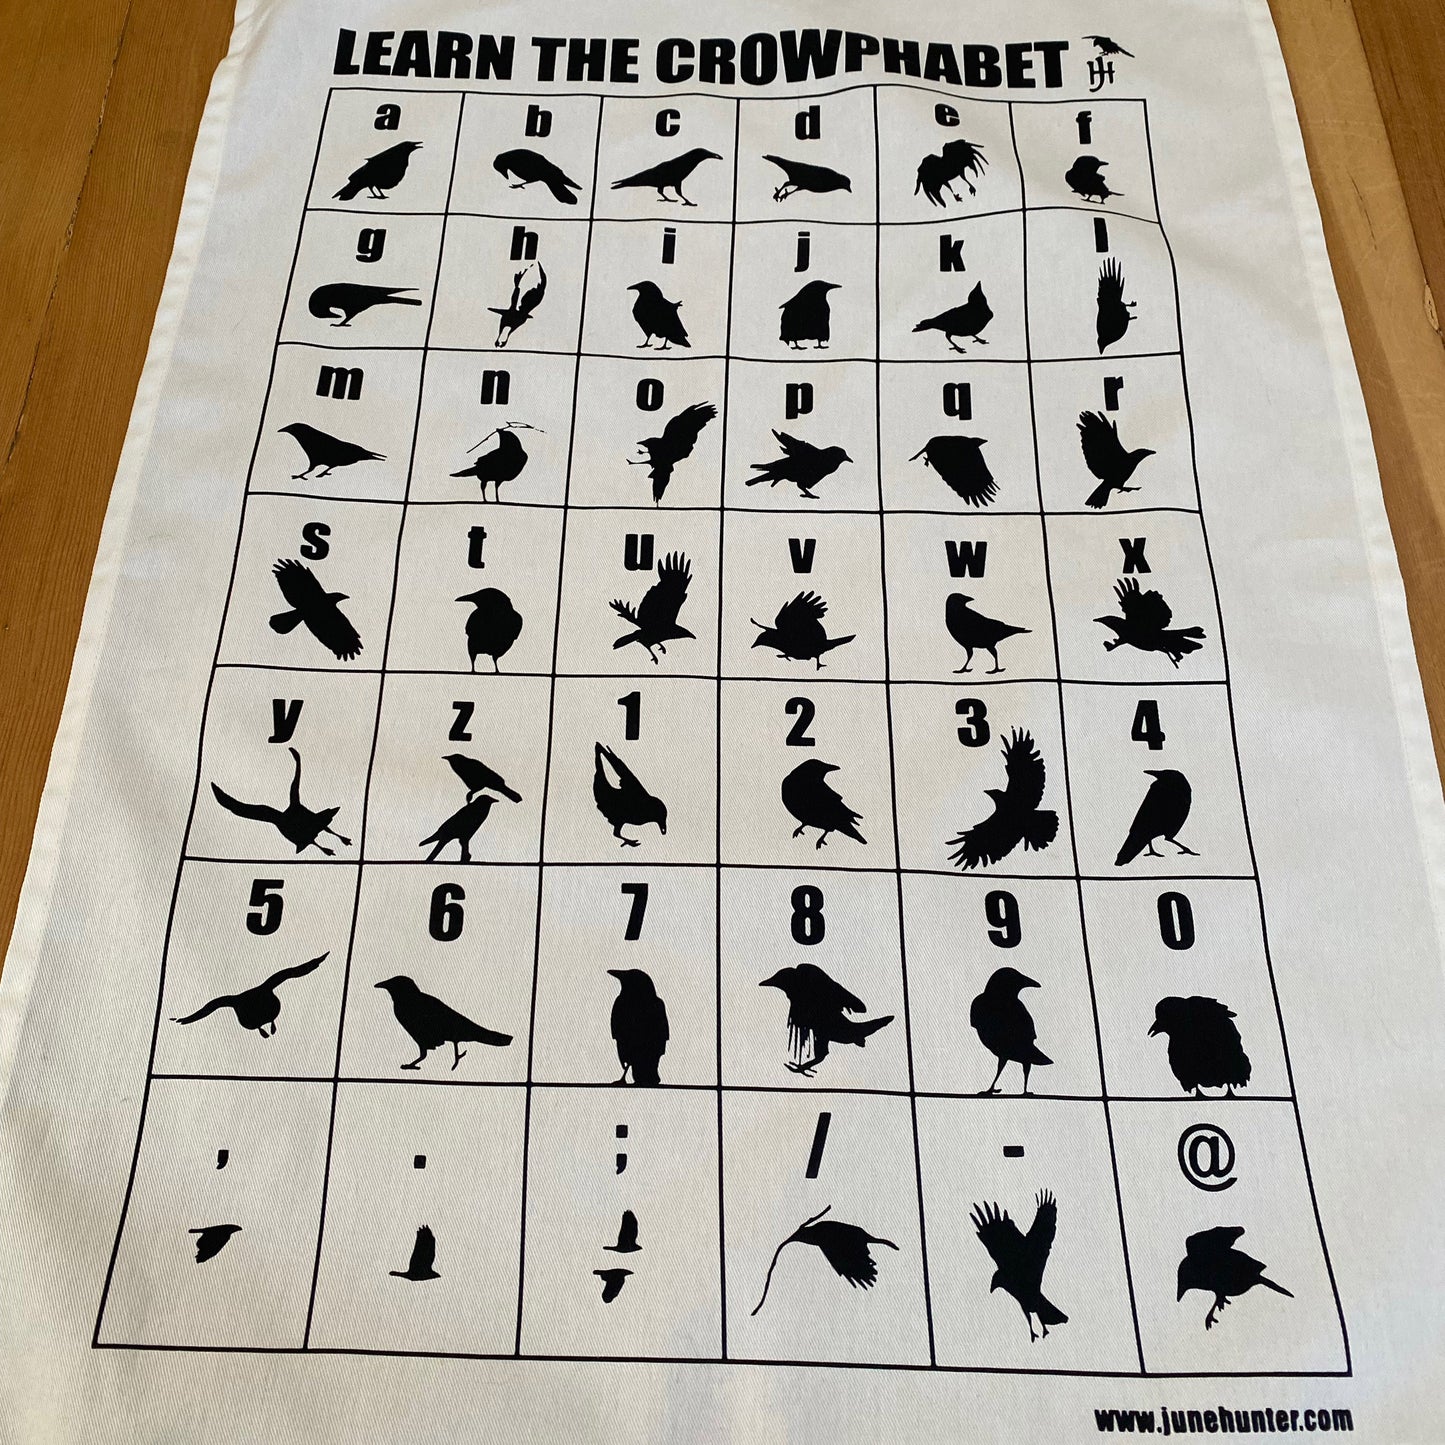 LEARNING THE CROWPHABET - Tea Towel - SALE